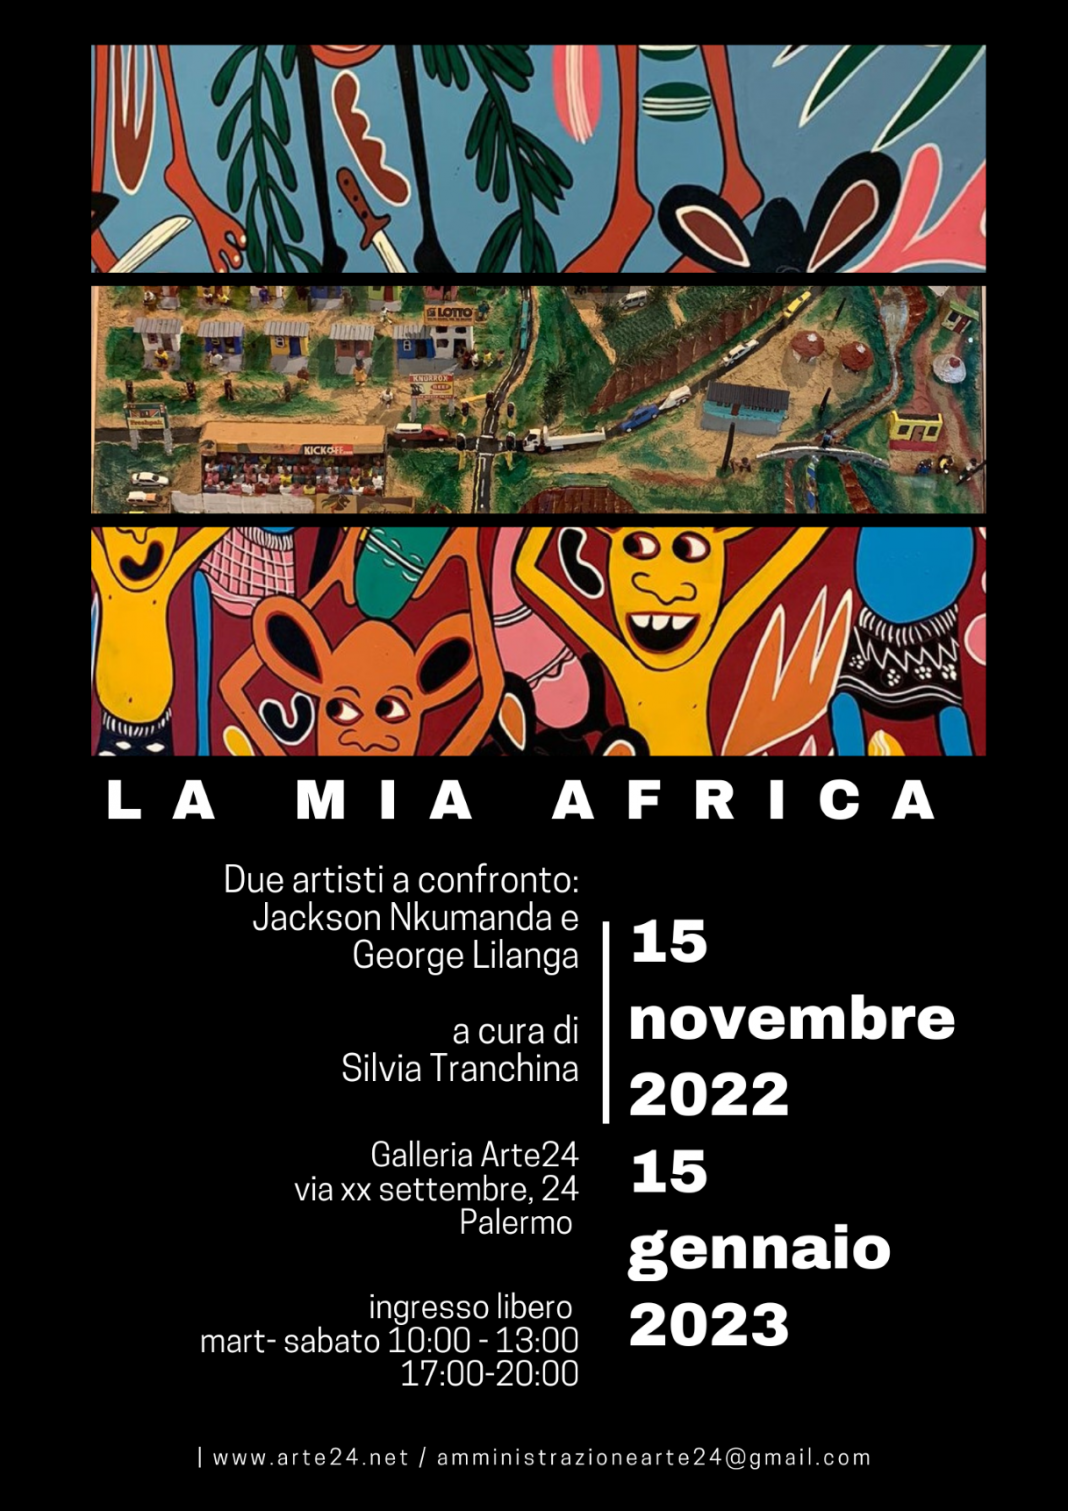 La mia Africahttps://www.exibart.com/repository/media/formidable/11/img/6ac/la-mia-africa-locandina-1-P-1068x1511.png